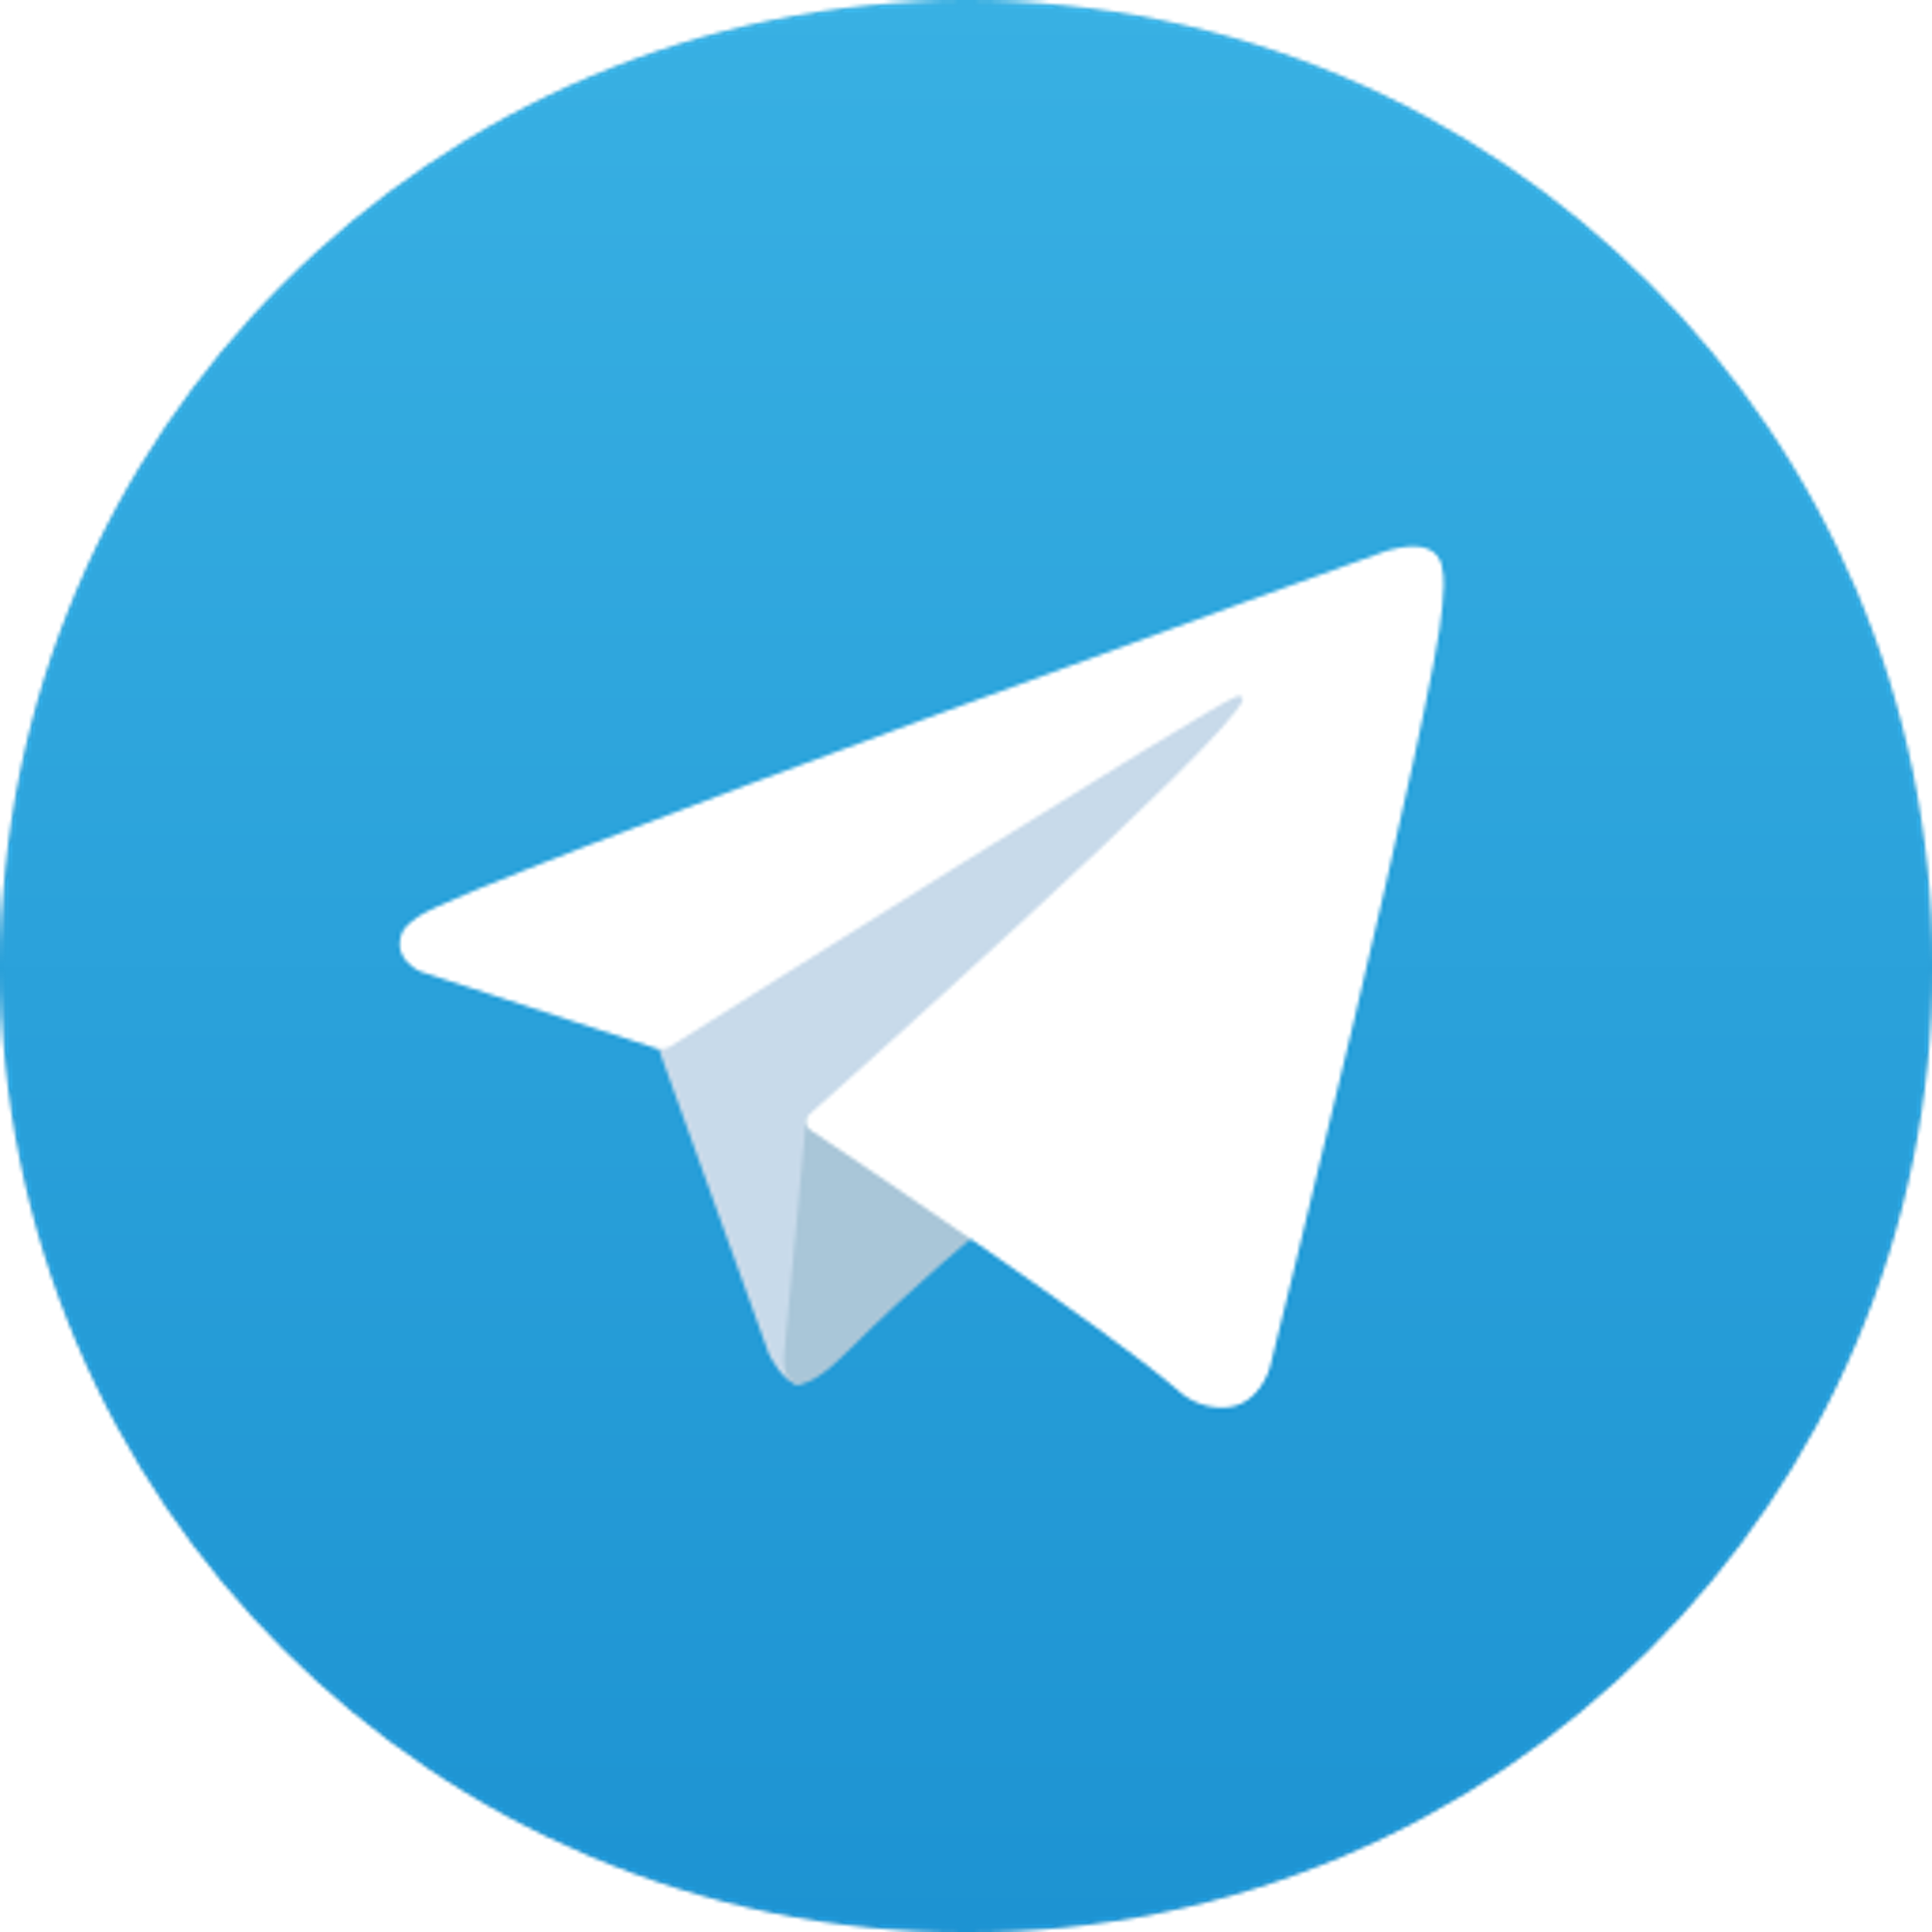 Send Telegram messages for new Tally responses